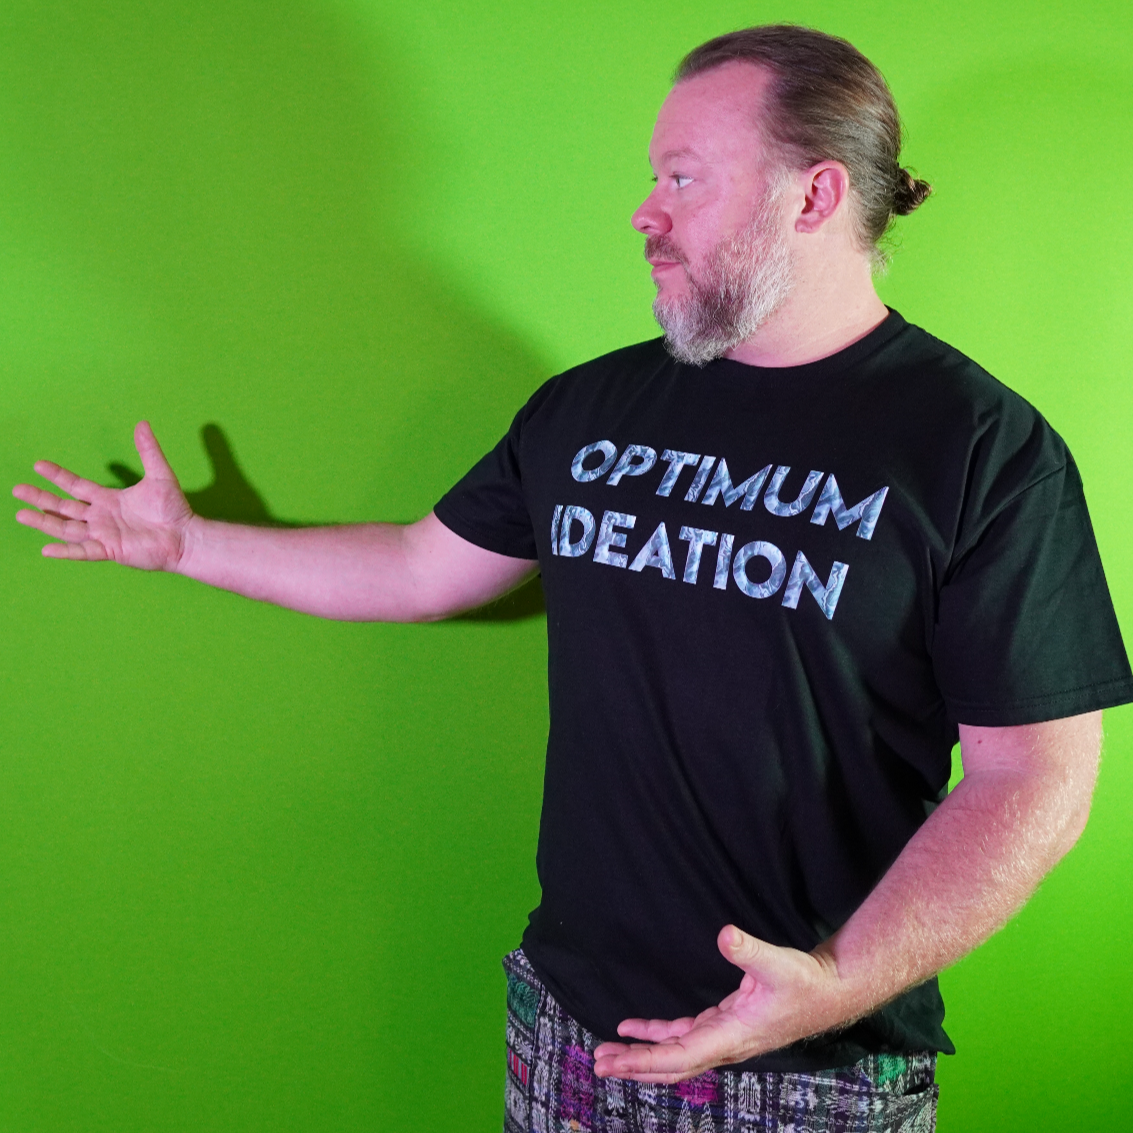 Optimum Ideation T shirt